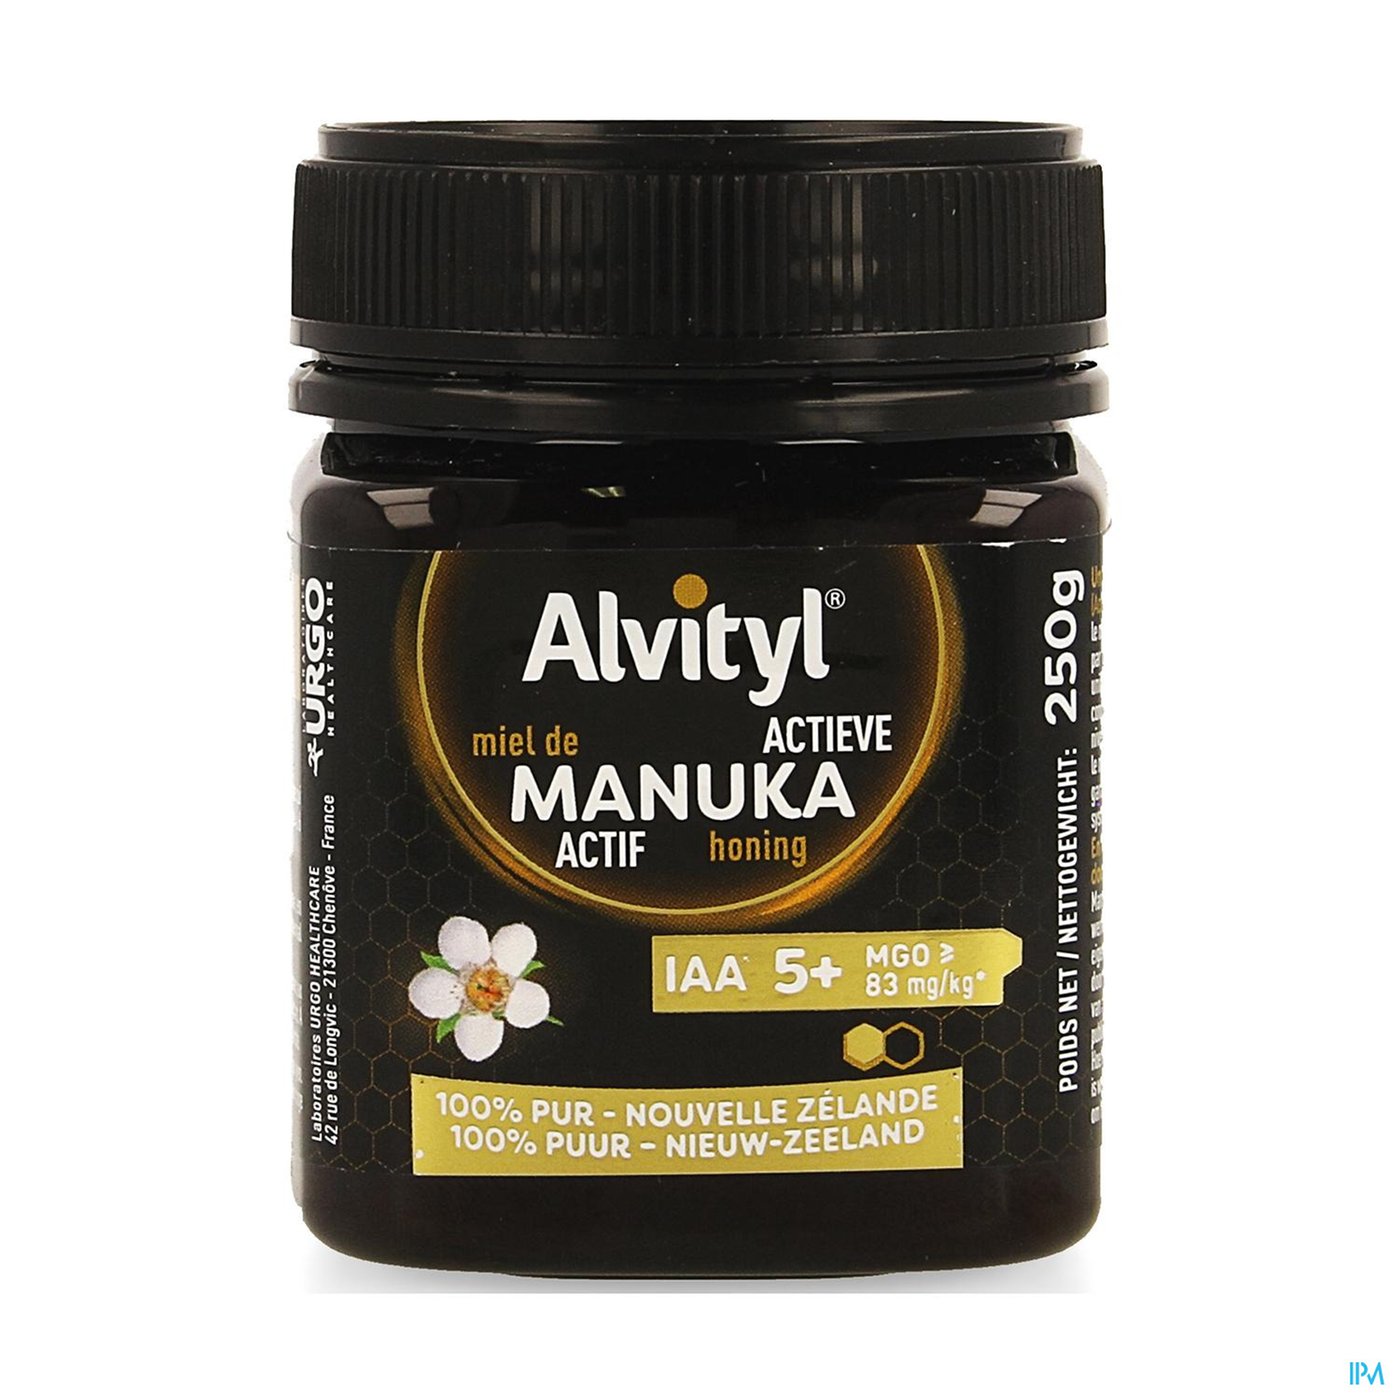 Alvityl Manuka Honey Iaa5+ 250g